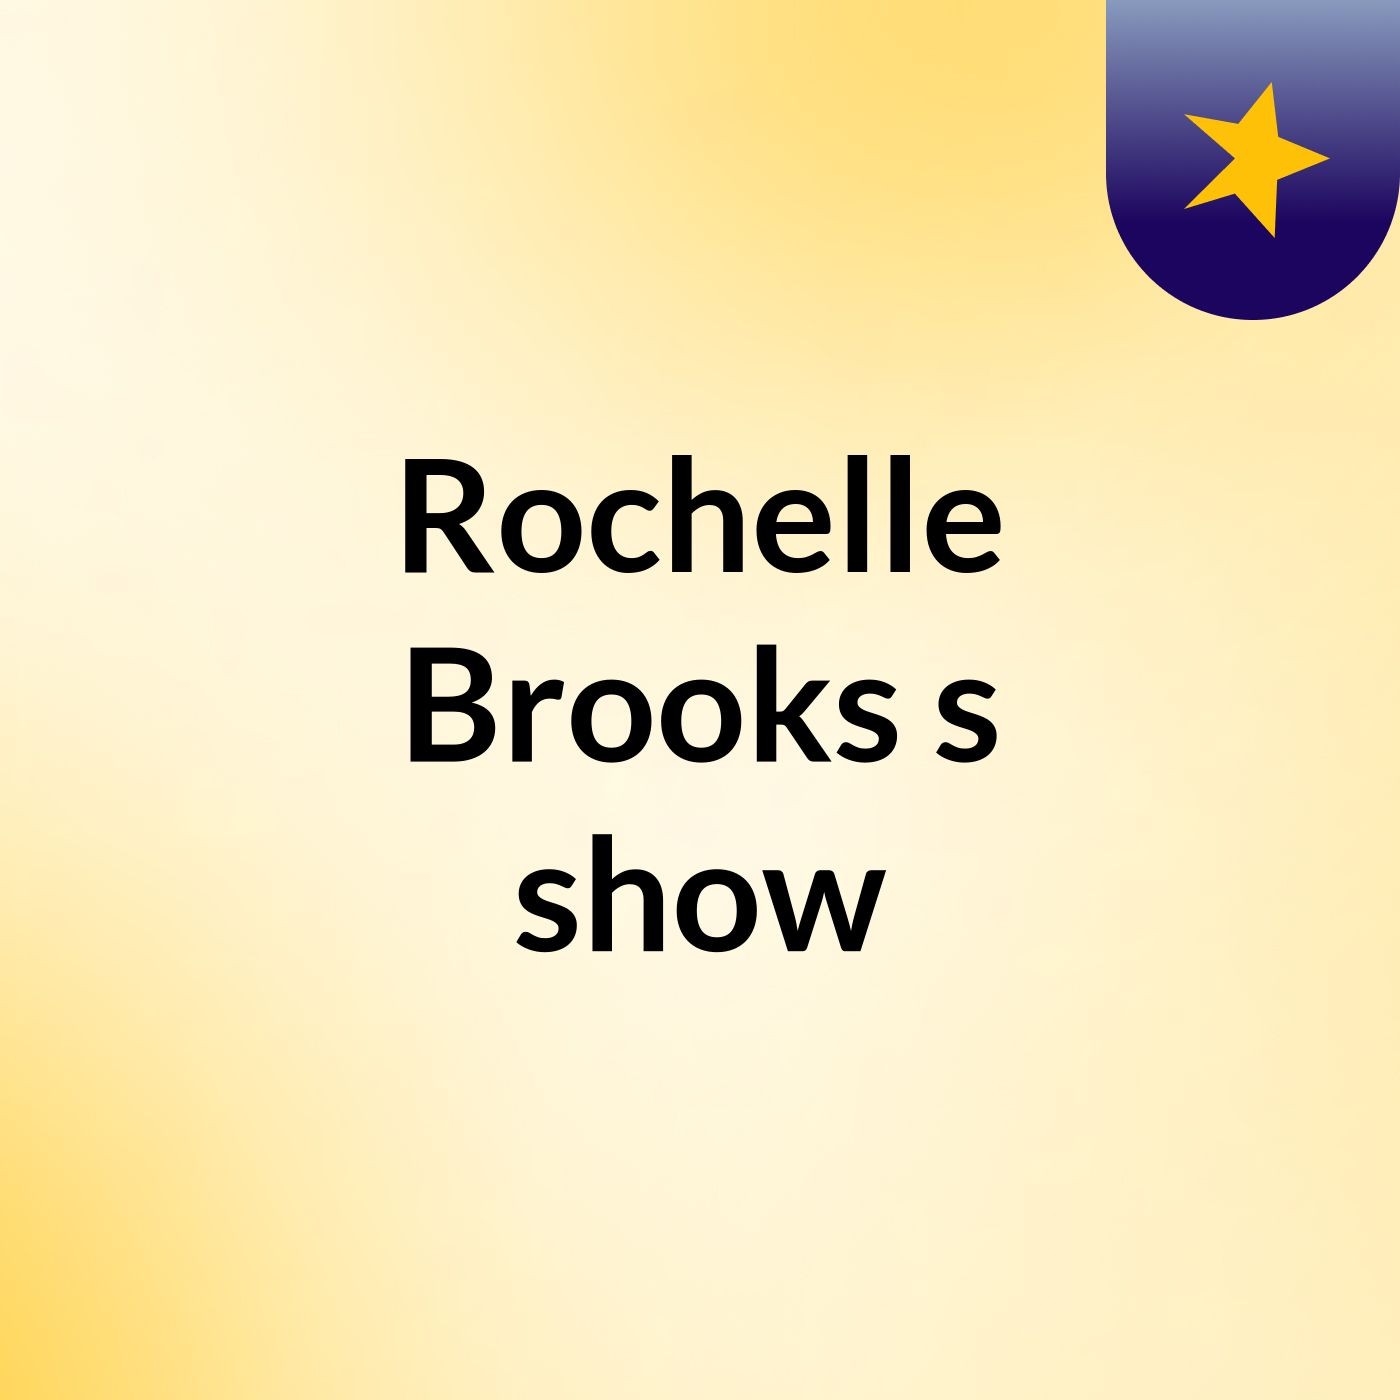 Episode 1 - Rochelle Brooks's show